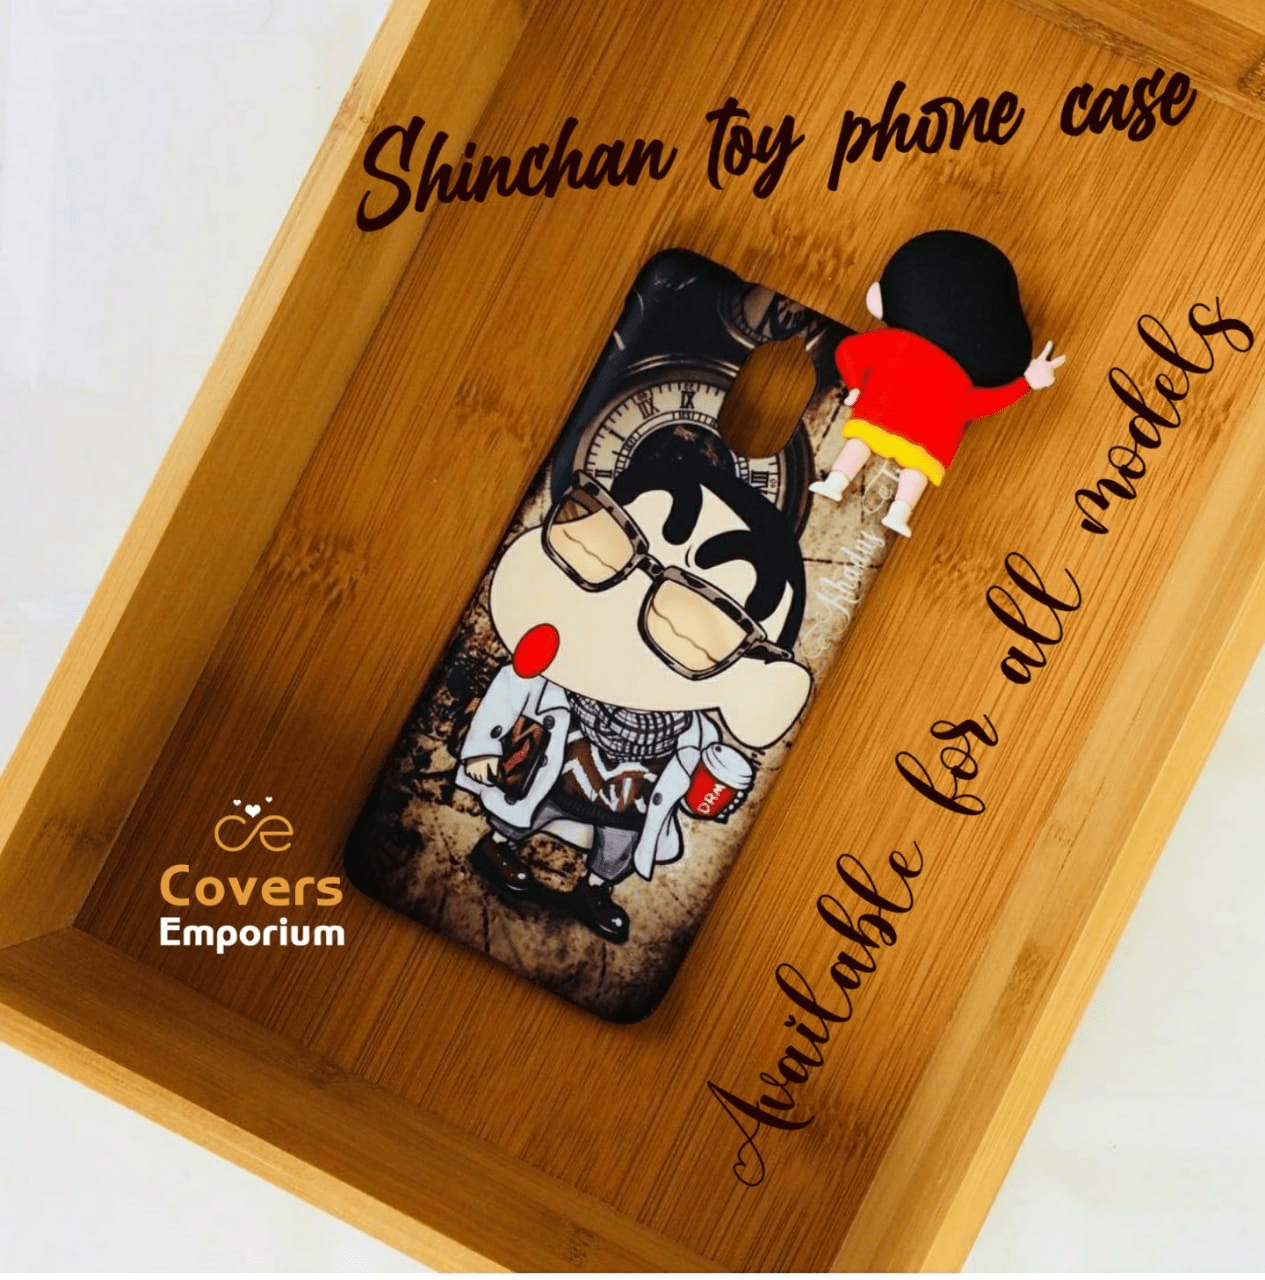 Shinchan smart toy phone case